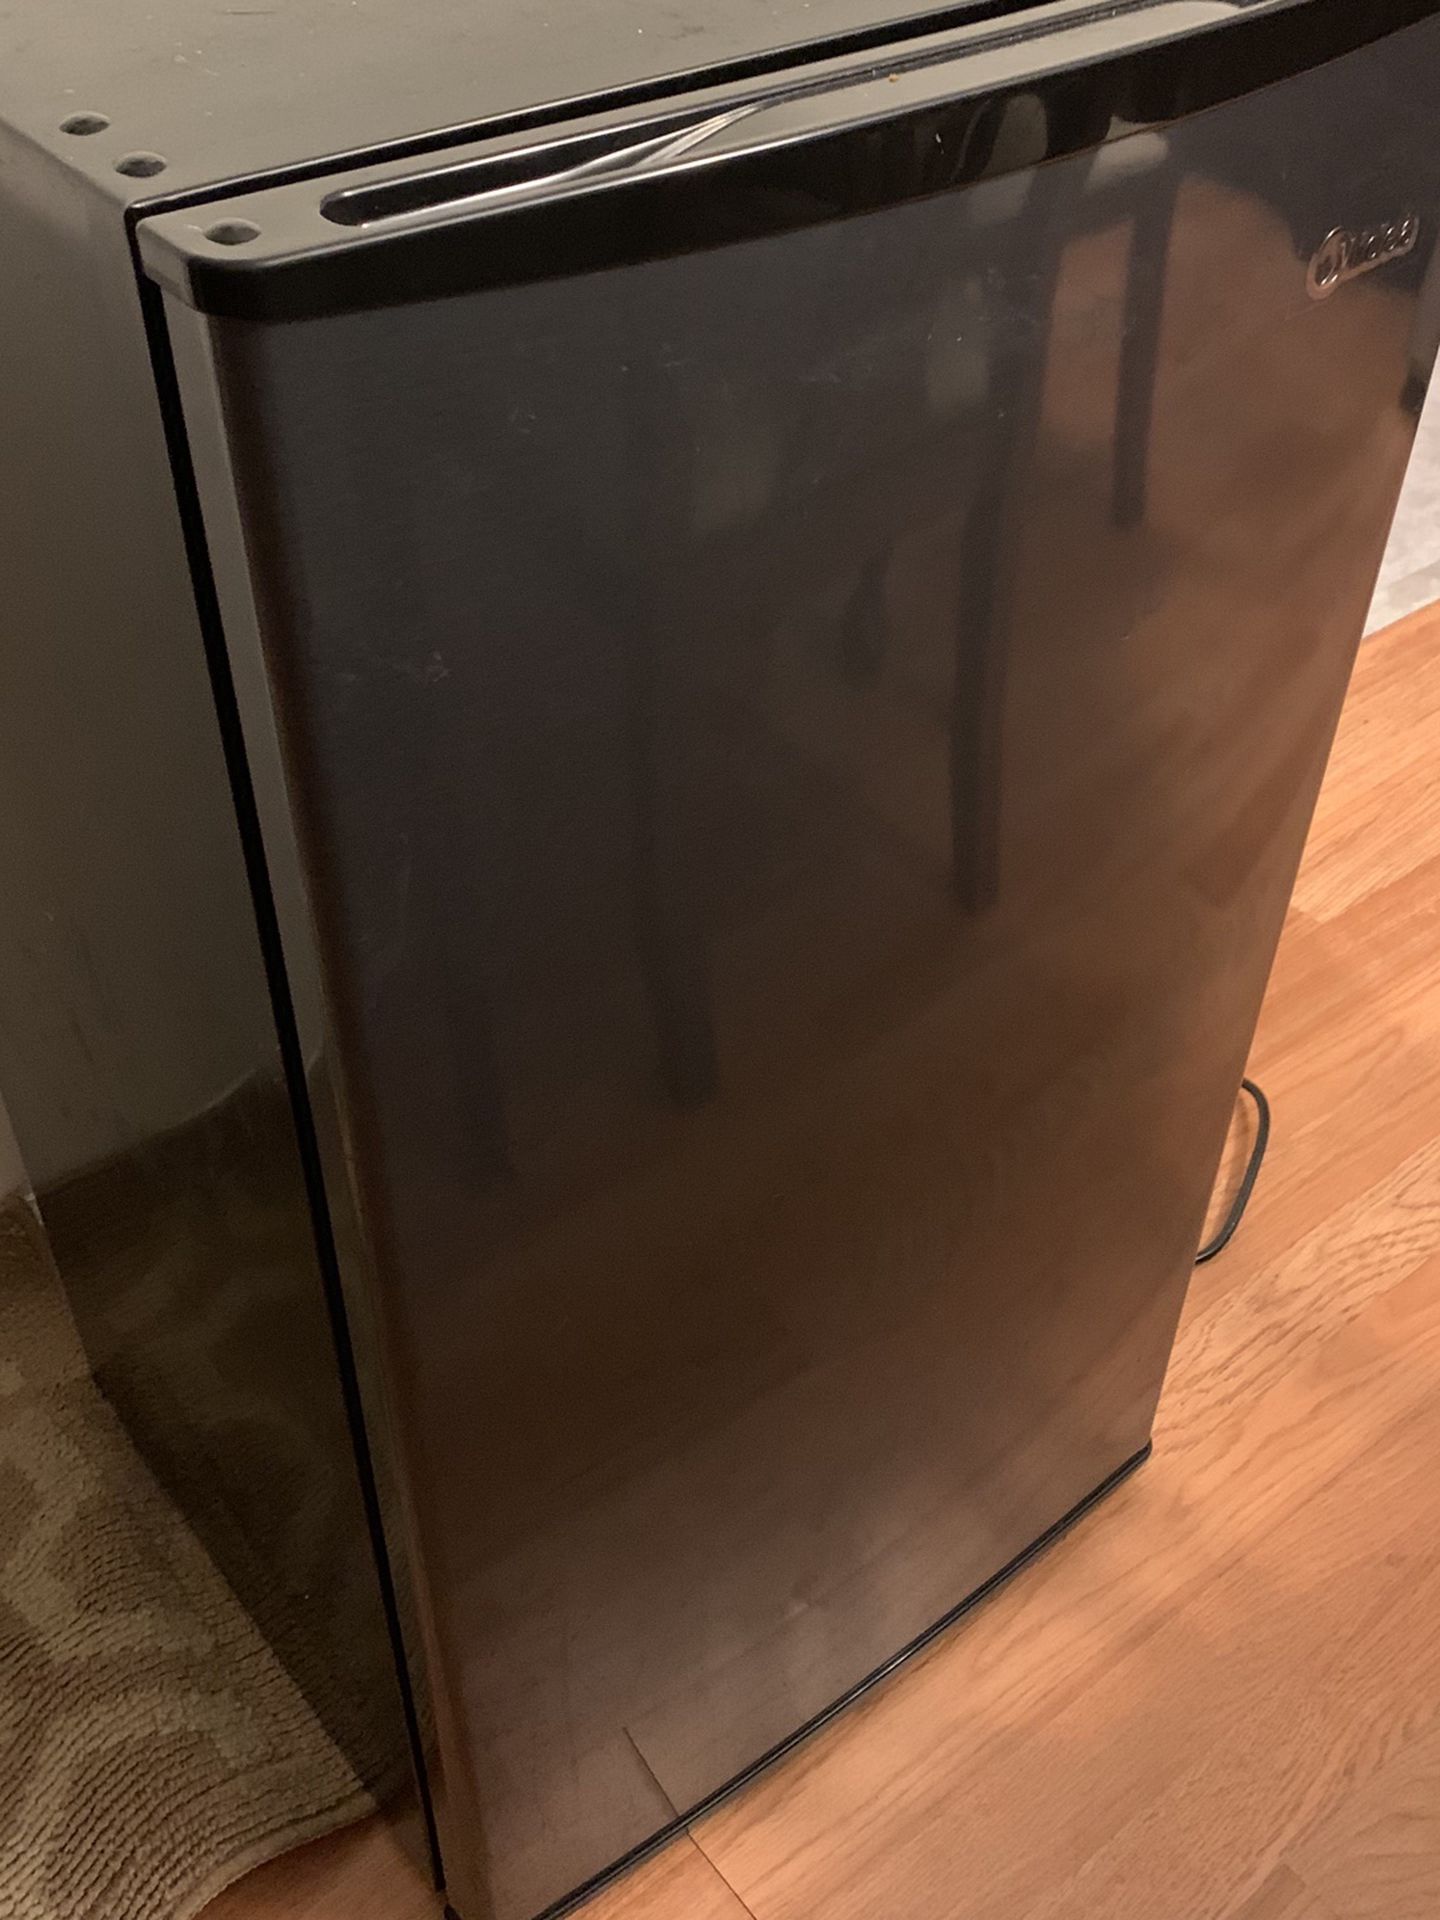 Mini - Refrigerator